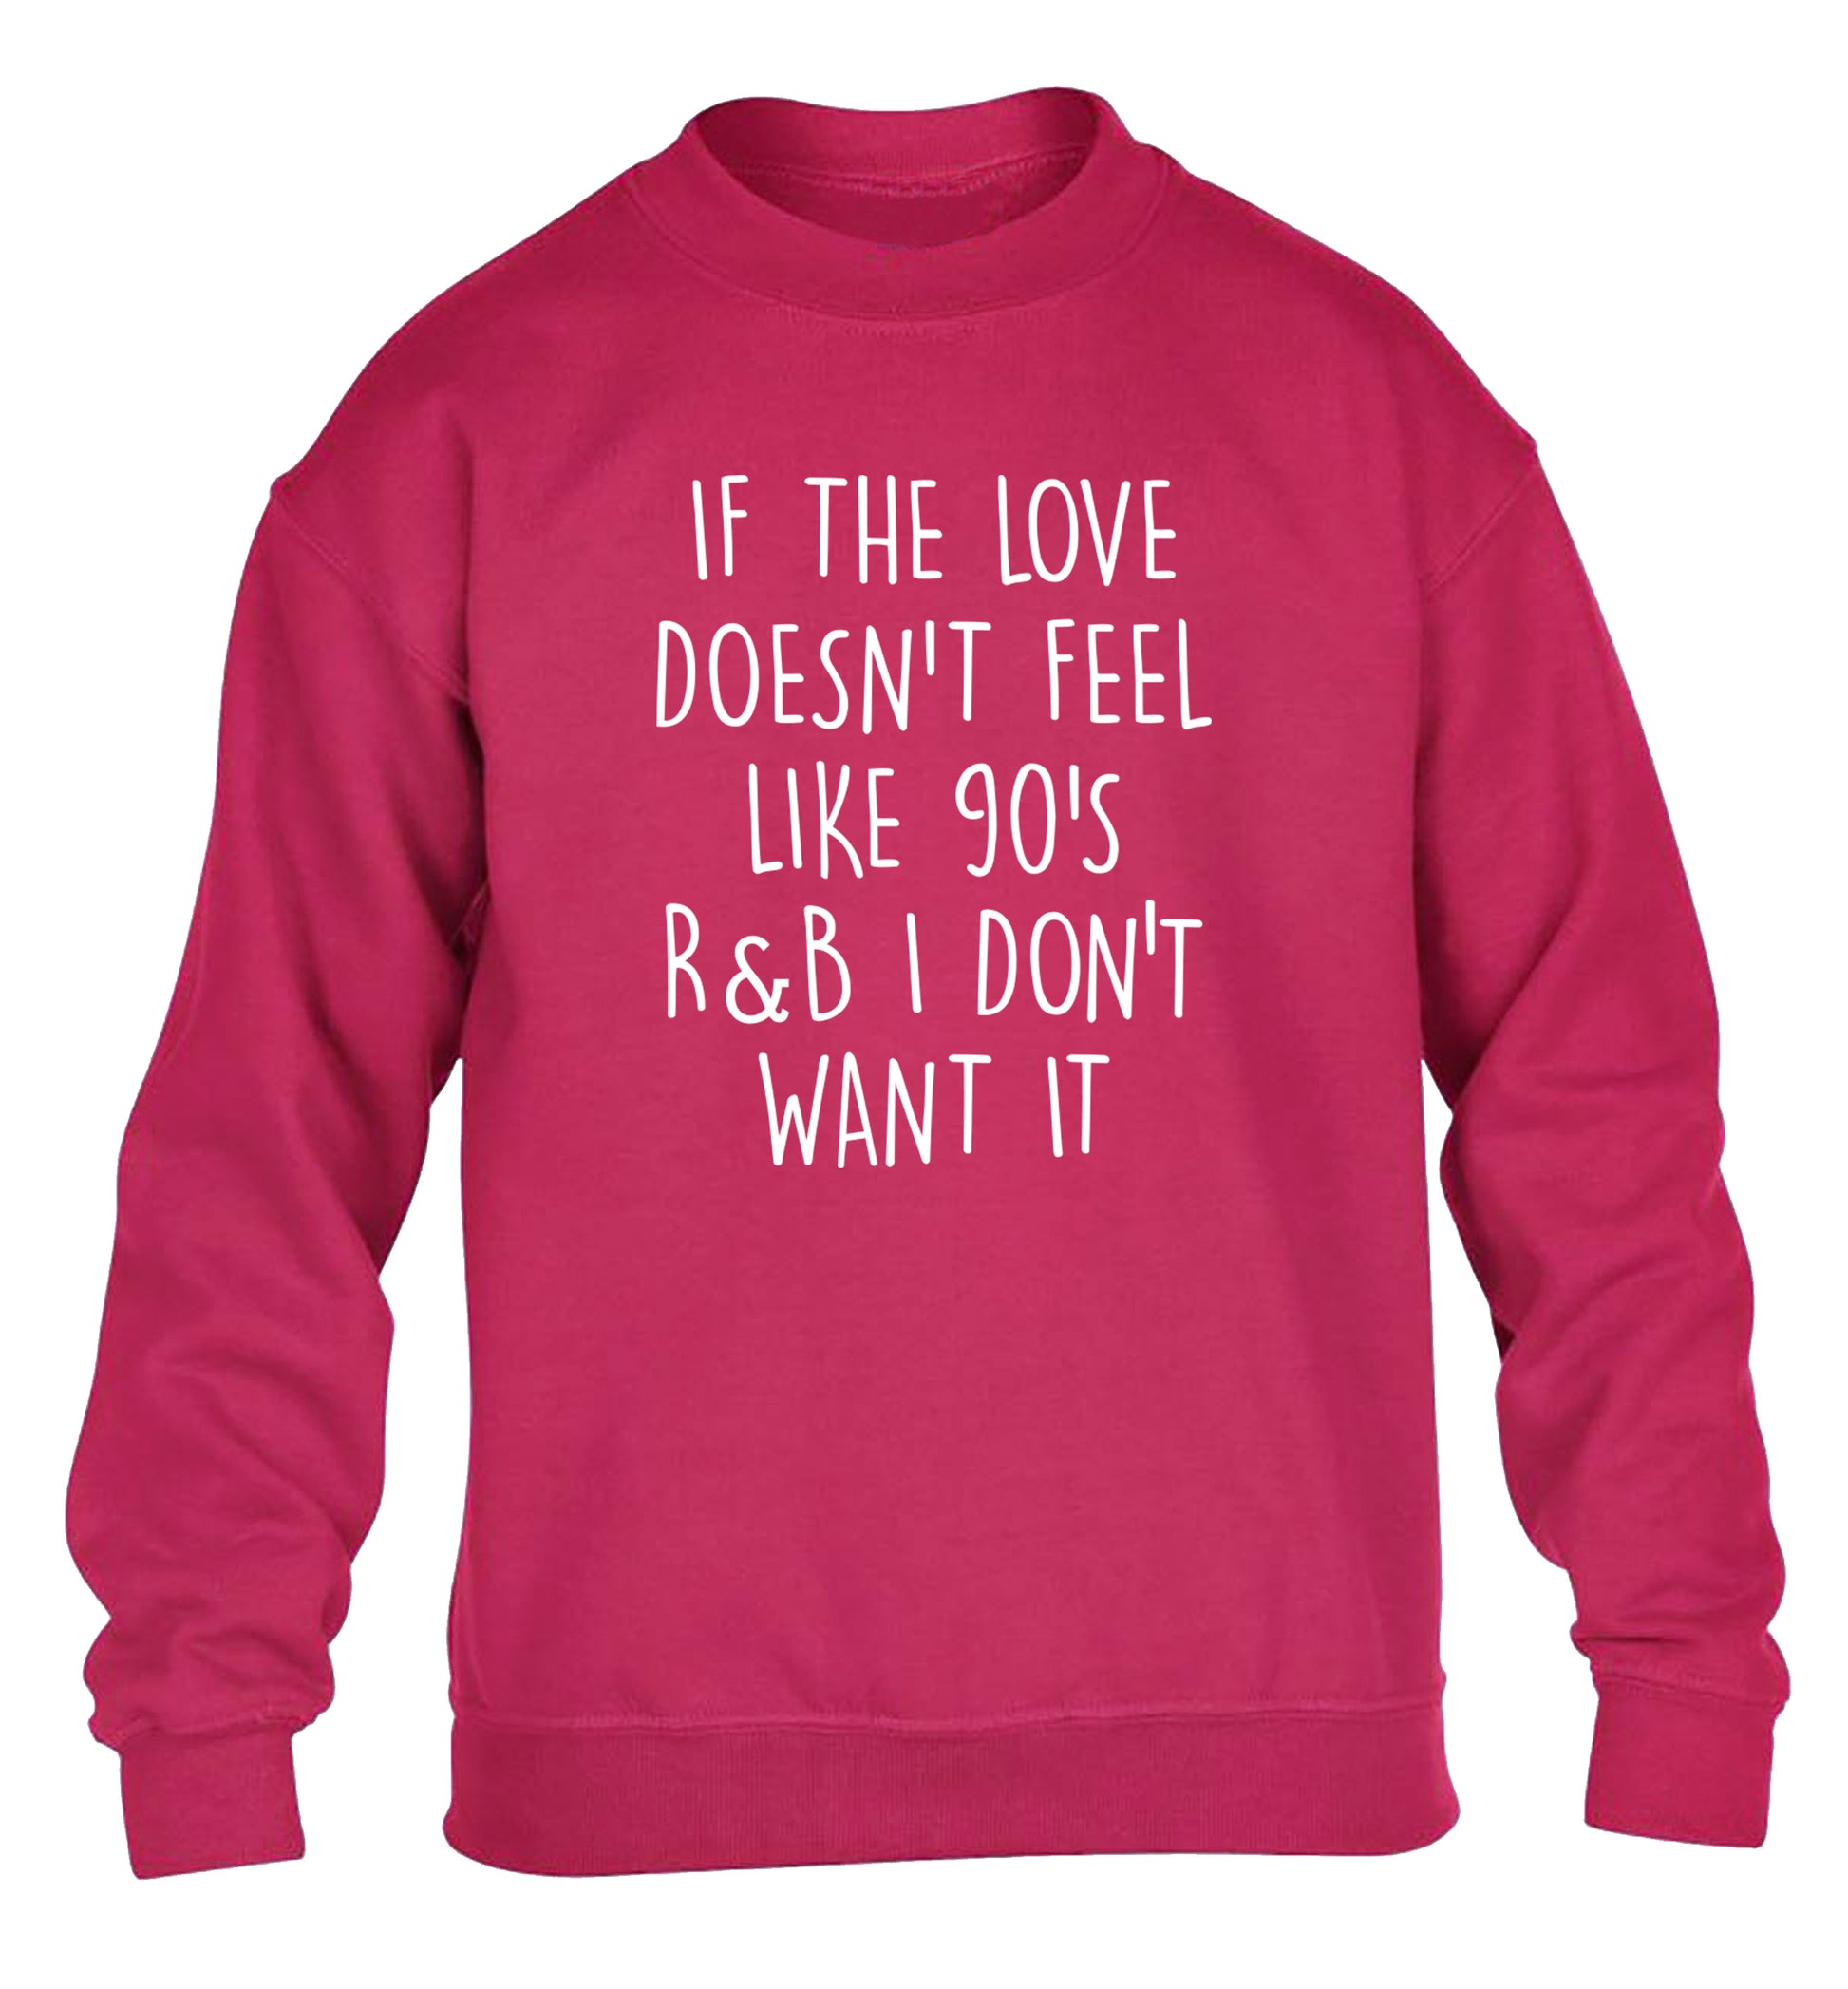 If the love doesn't feel like 90's R&B I don't want it children's pink sweater 12-14 Years